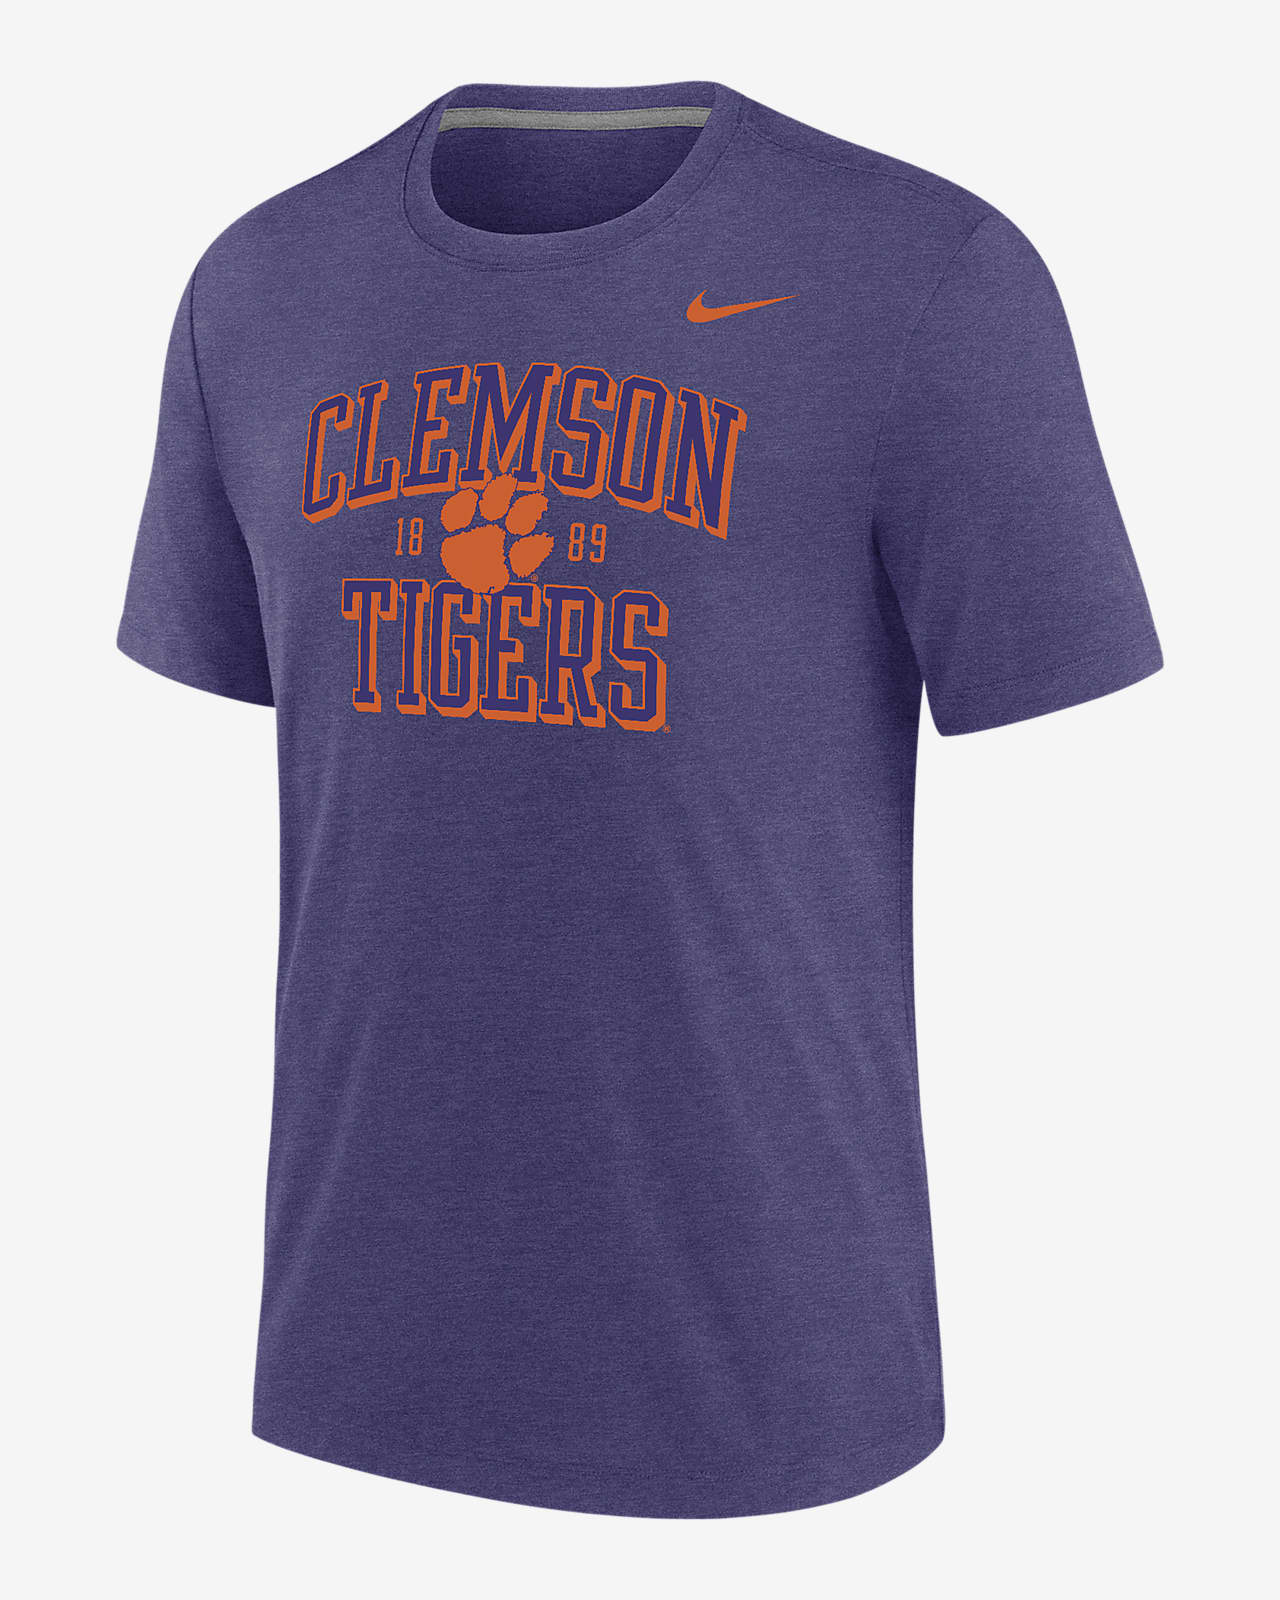 Clemson Men's Nike College T-Shirt